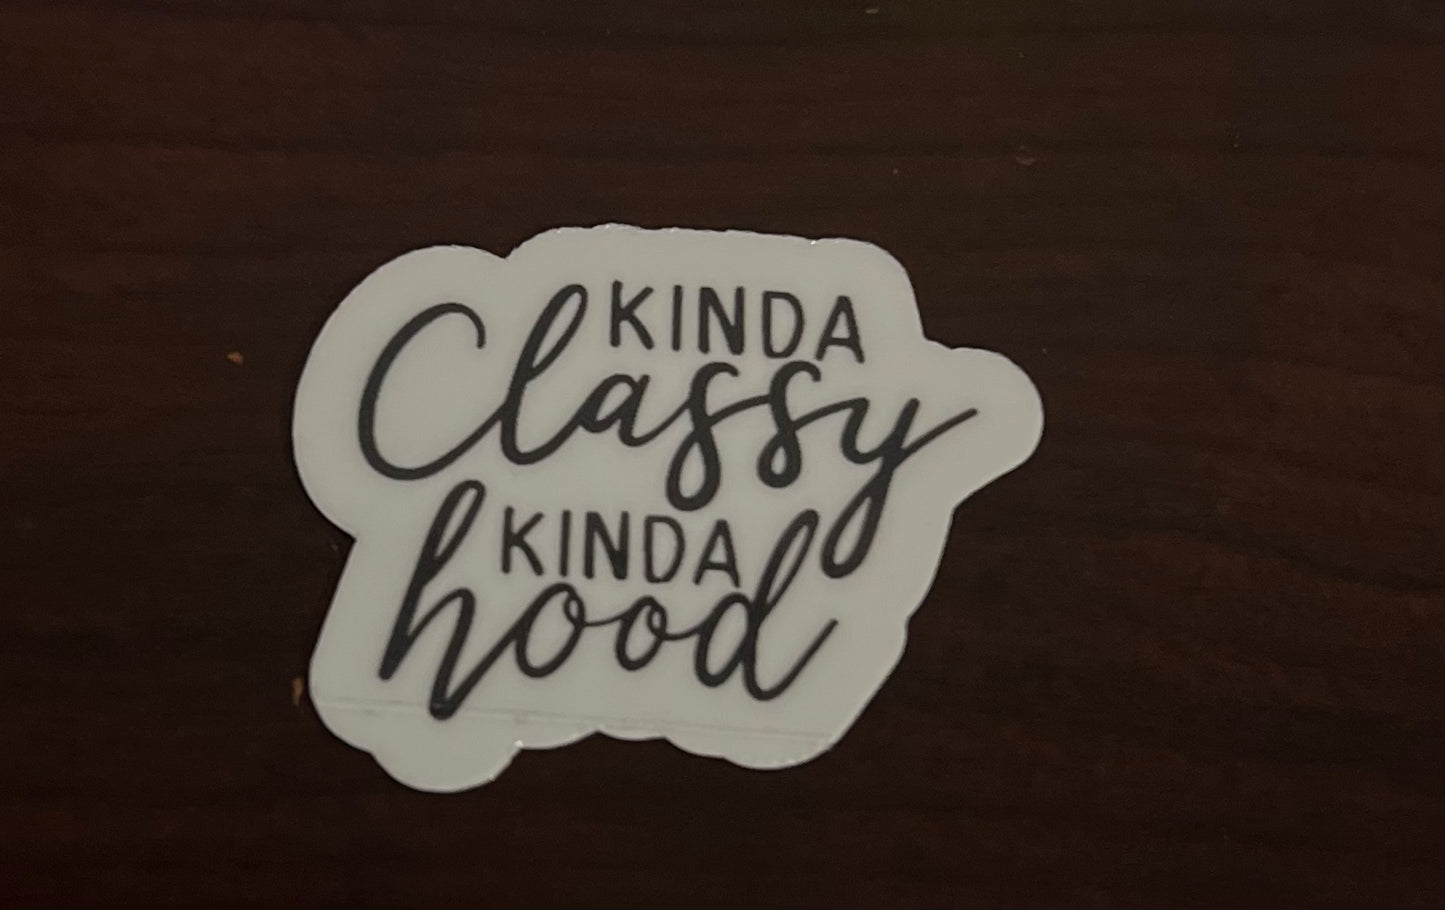 Kinda Classy Kinda Hood Sticker